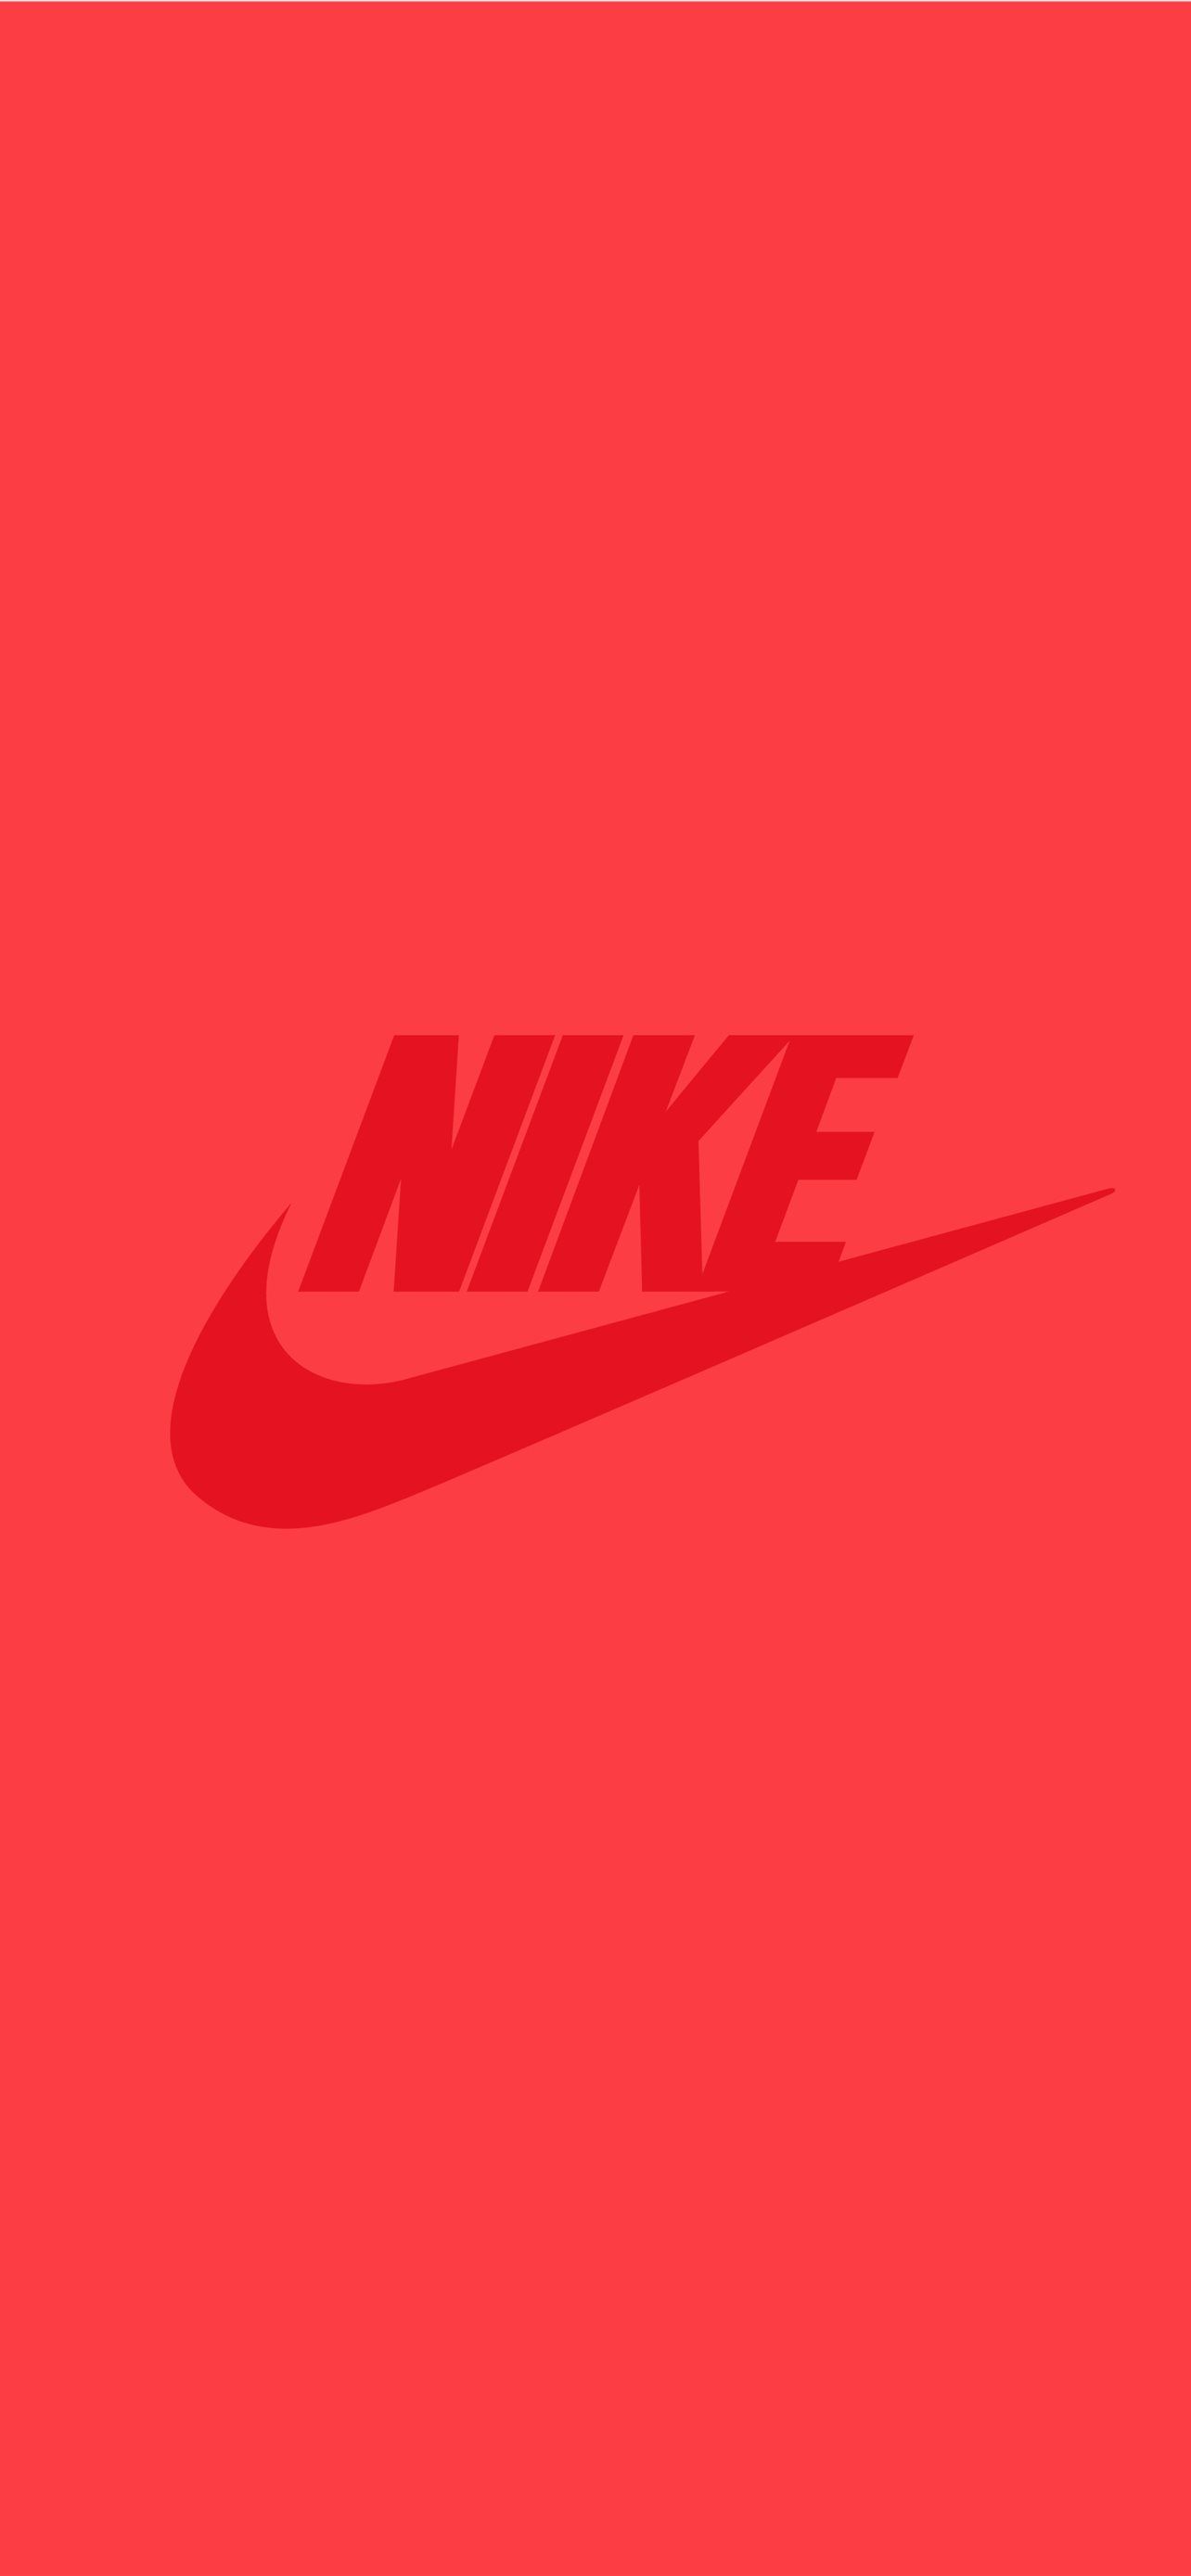  Nike Hintergrundbild 1284x2778. Nike iPhone iPhone Wallpaper Free Download